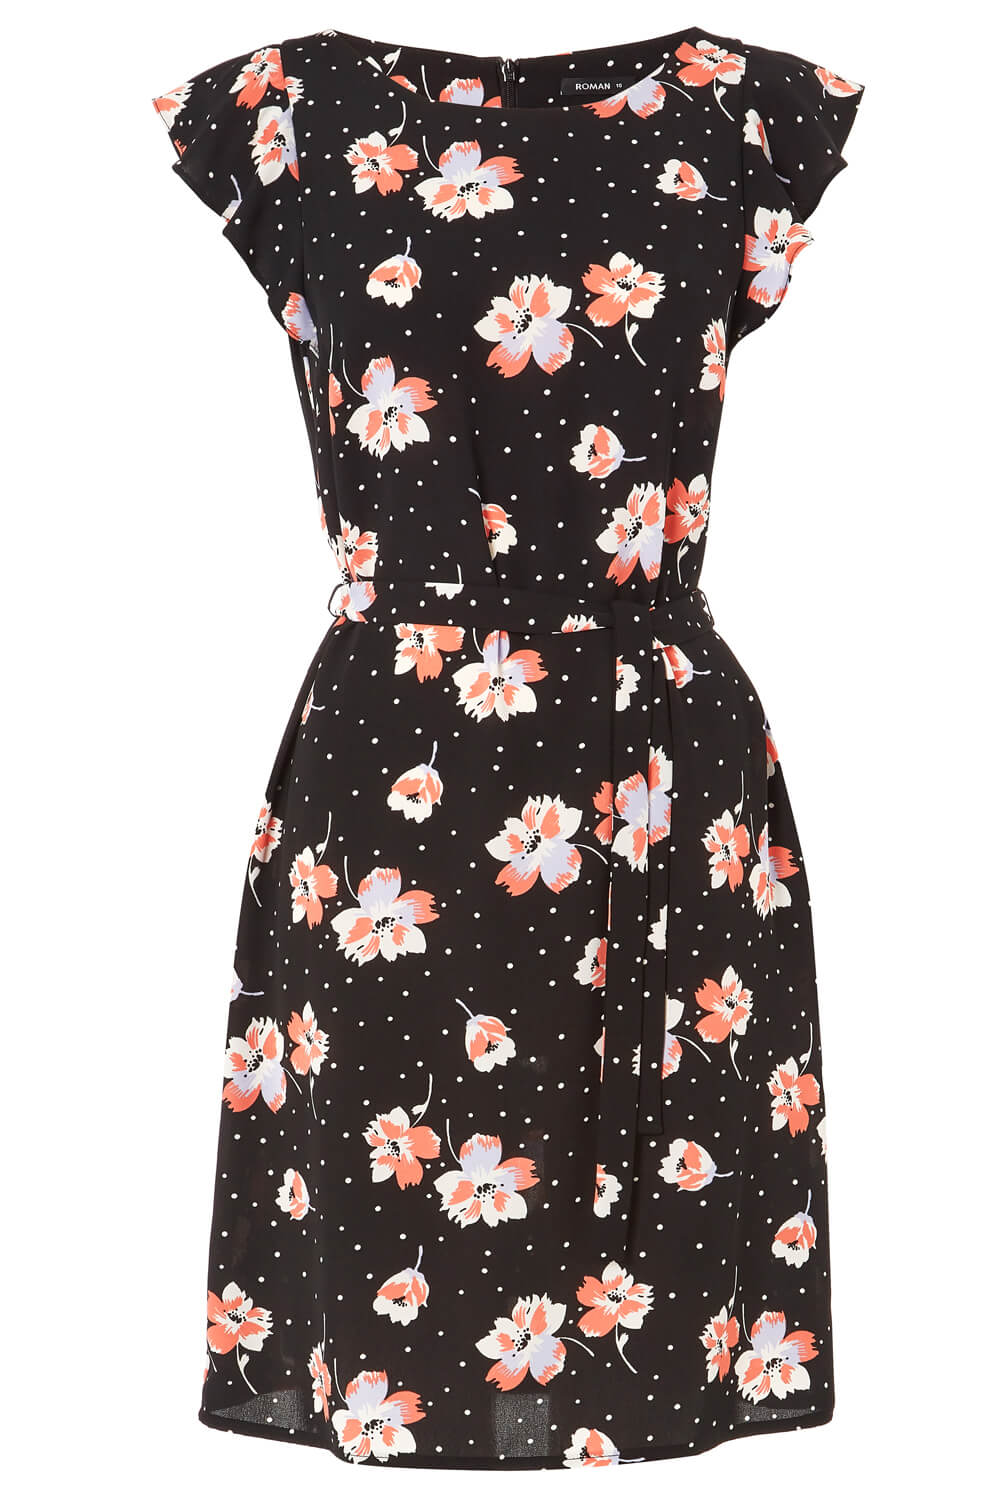 Black Floral Spot Frill Sleeve Shift Dress, Image 4 of 4